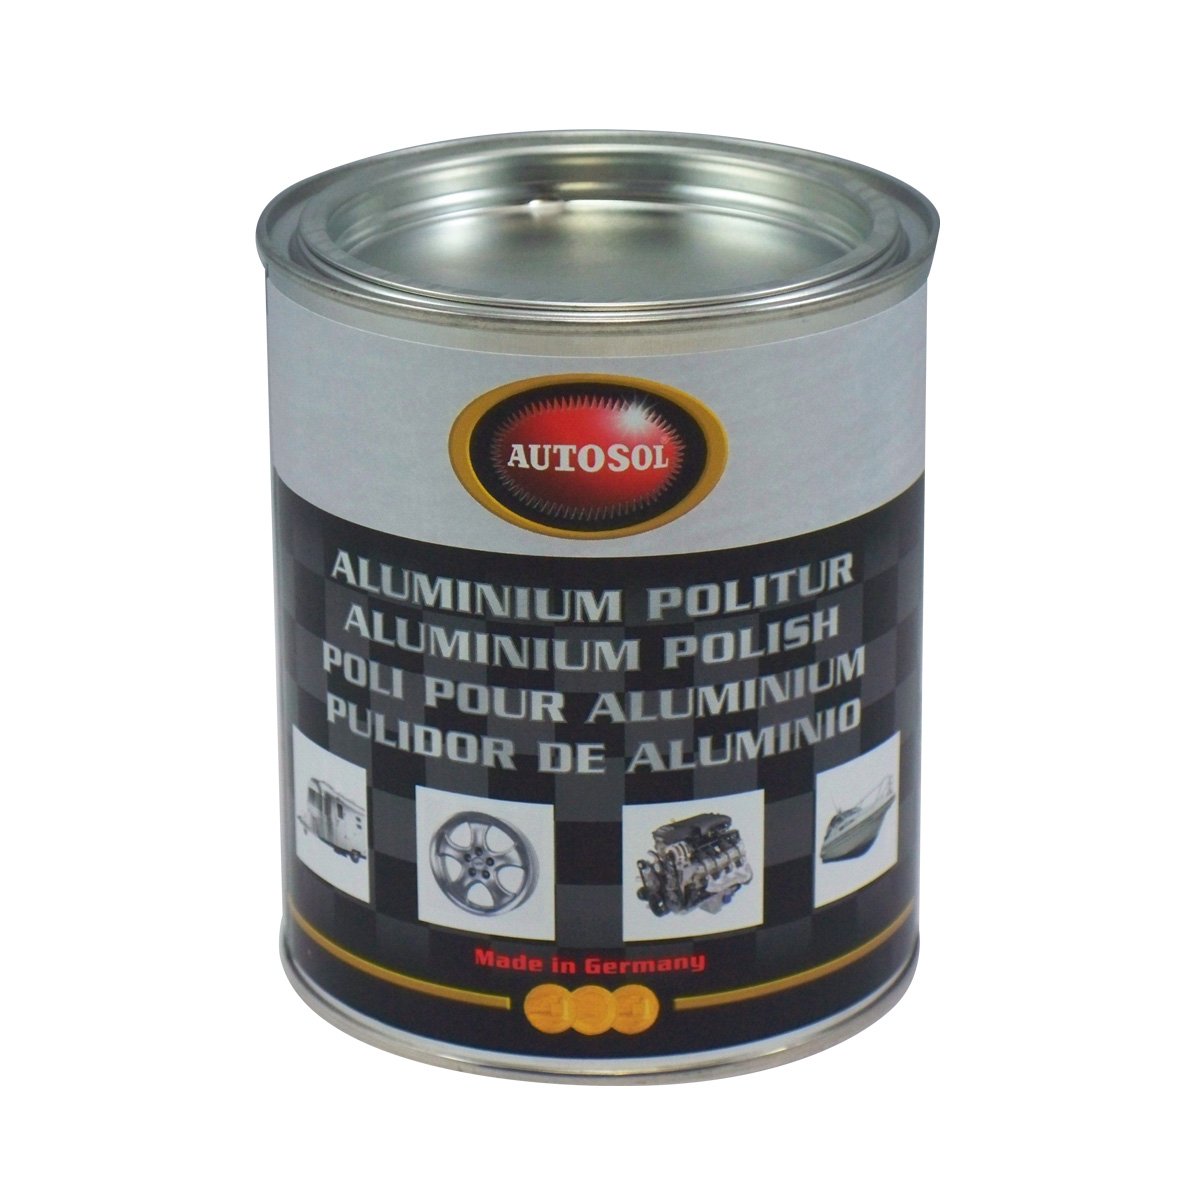 Autosol 01 001831 Aluminium Politur, 750 ml, Schwarz von Autosol